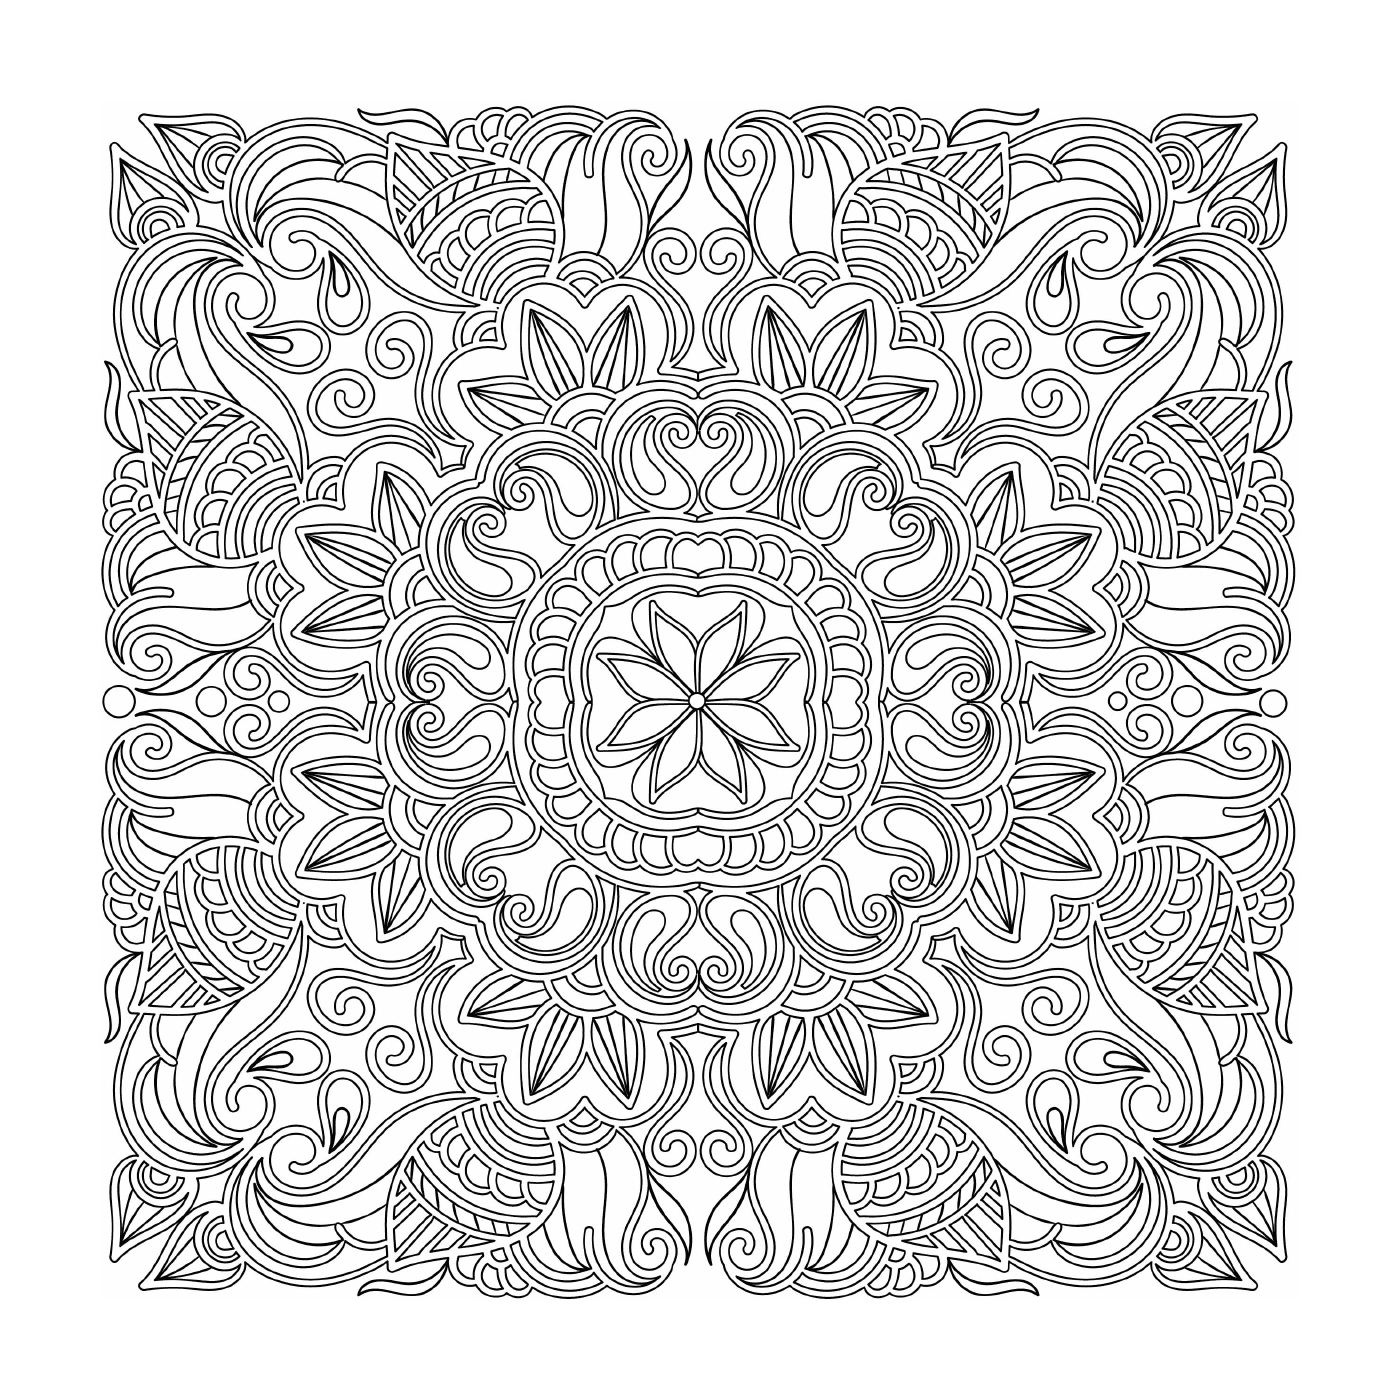  Mandala - Complexo Doodle 